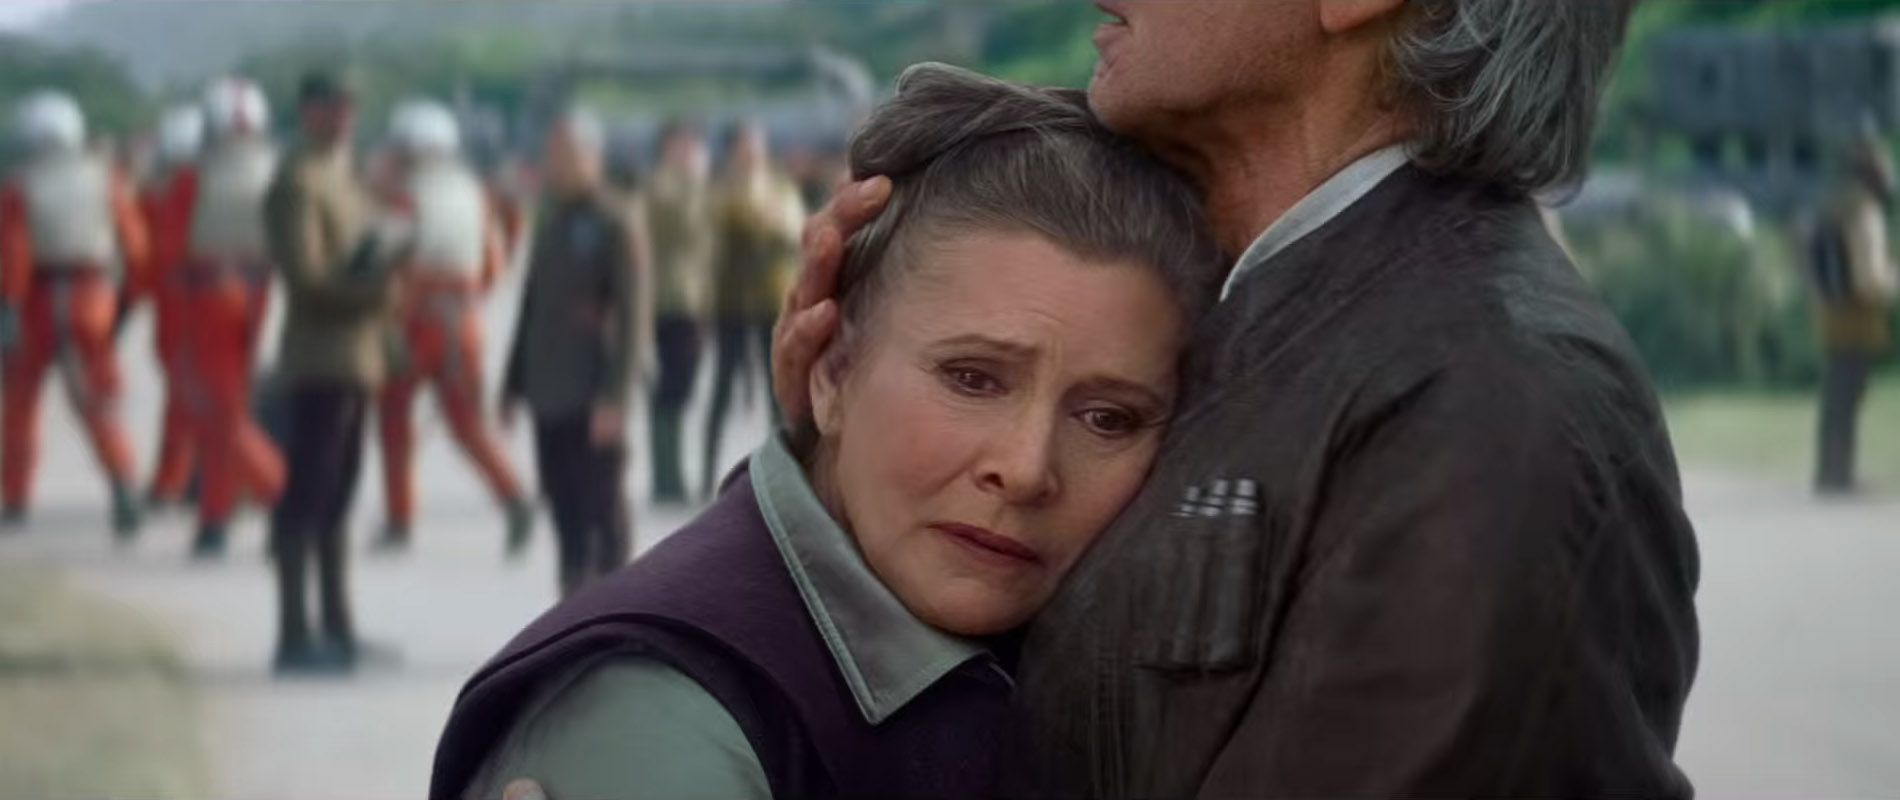 Star Wars 7 Trailer #3 - Leia and Han Solo Reunite